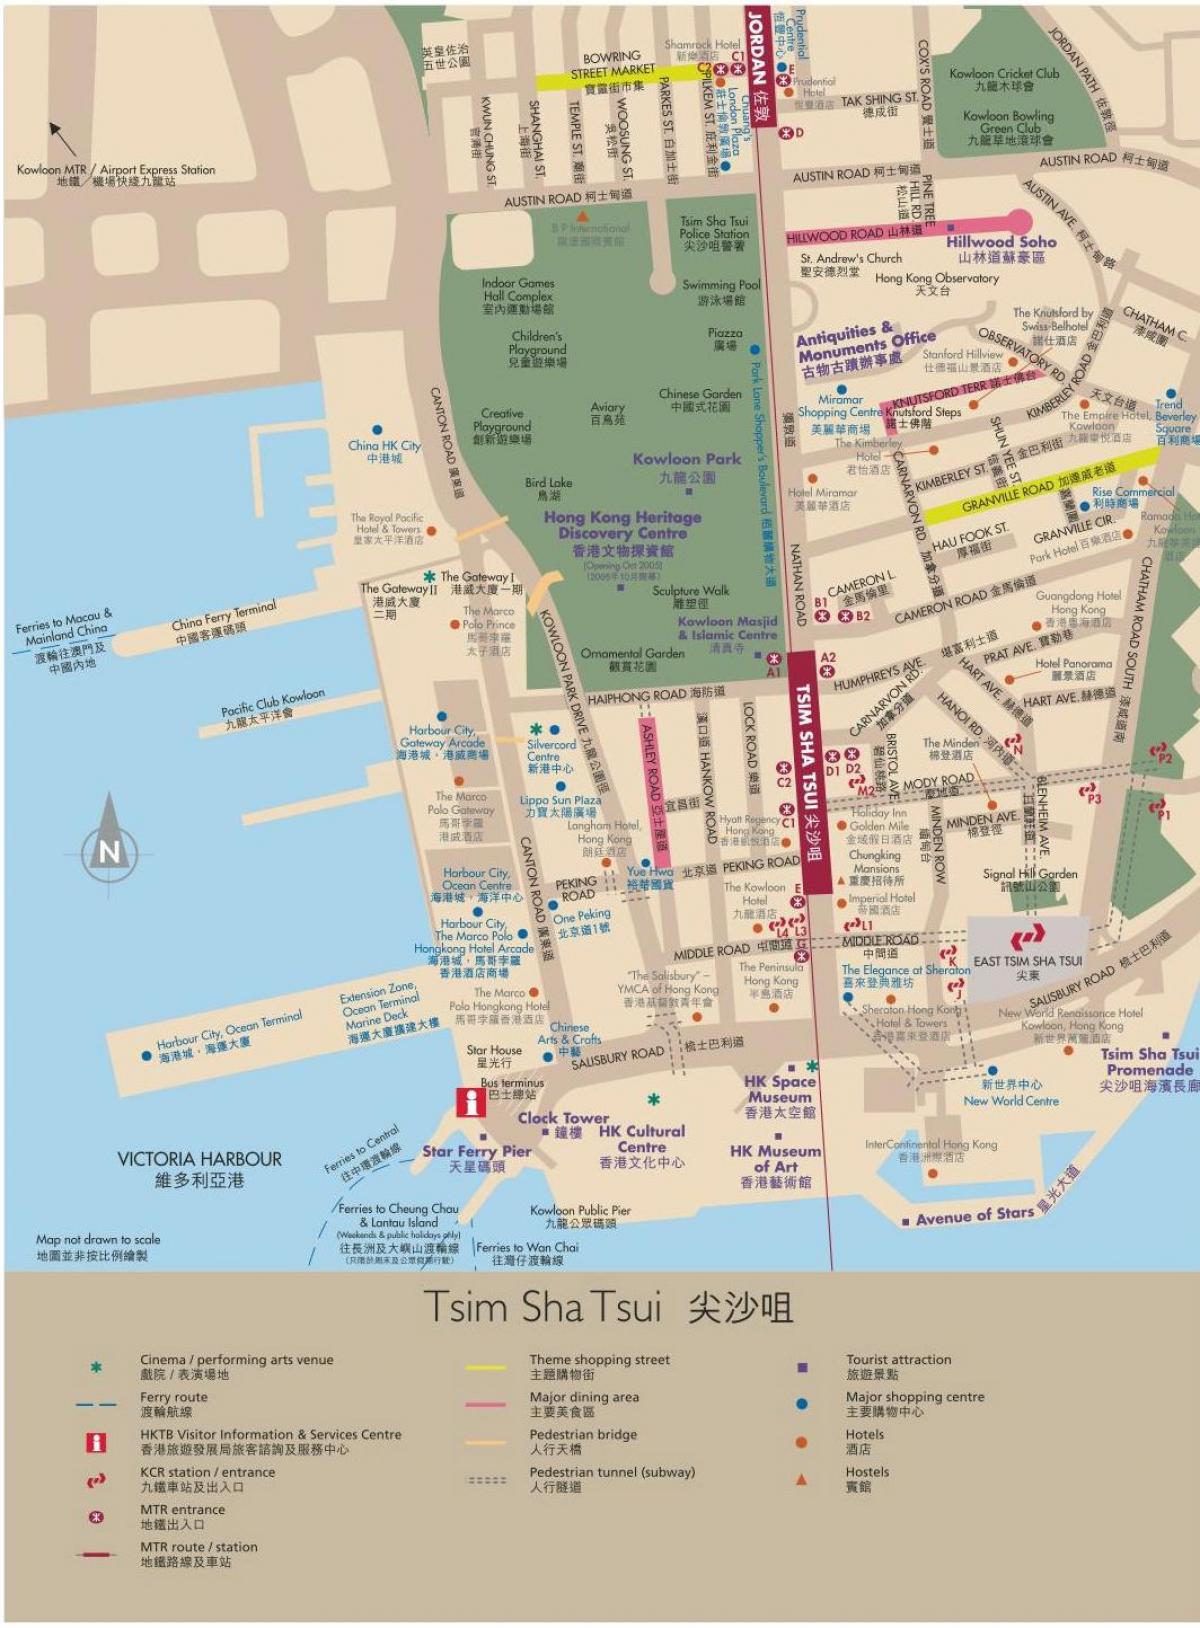 Peta Hong Kong Kowloon